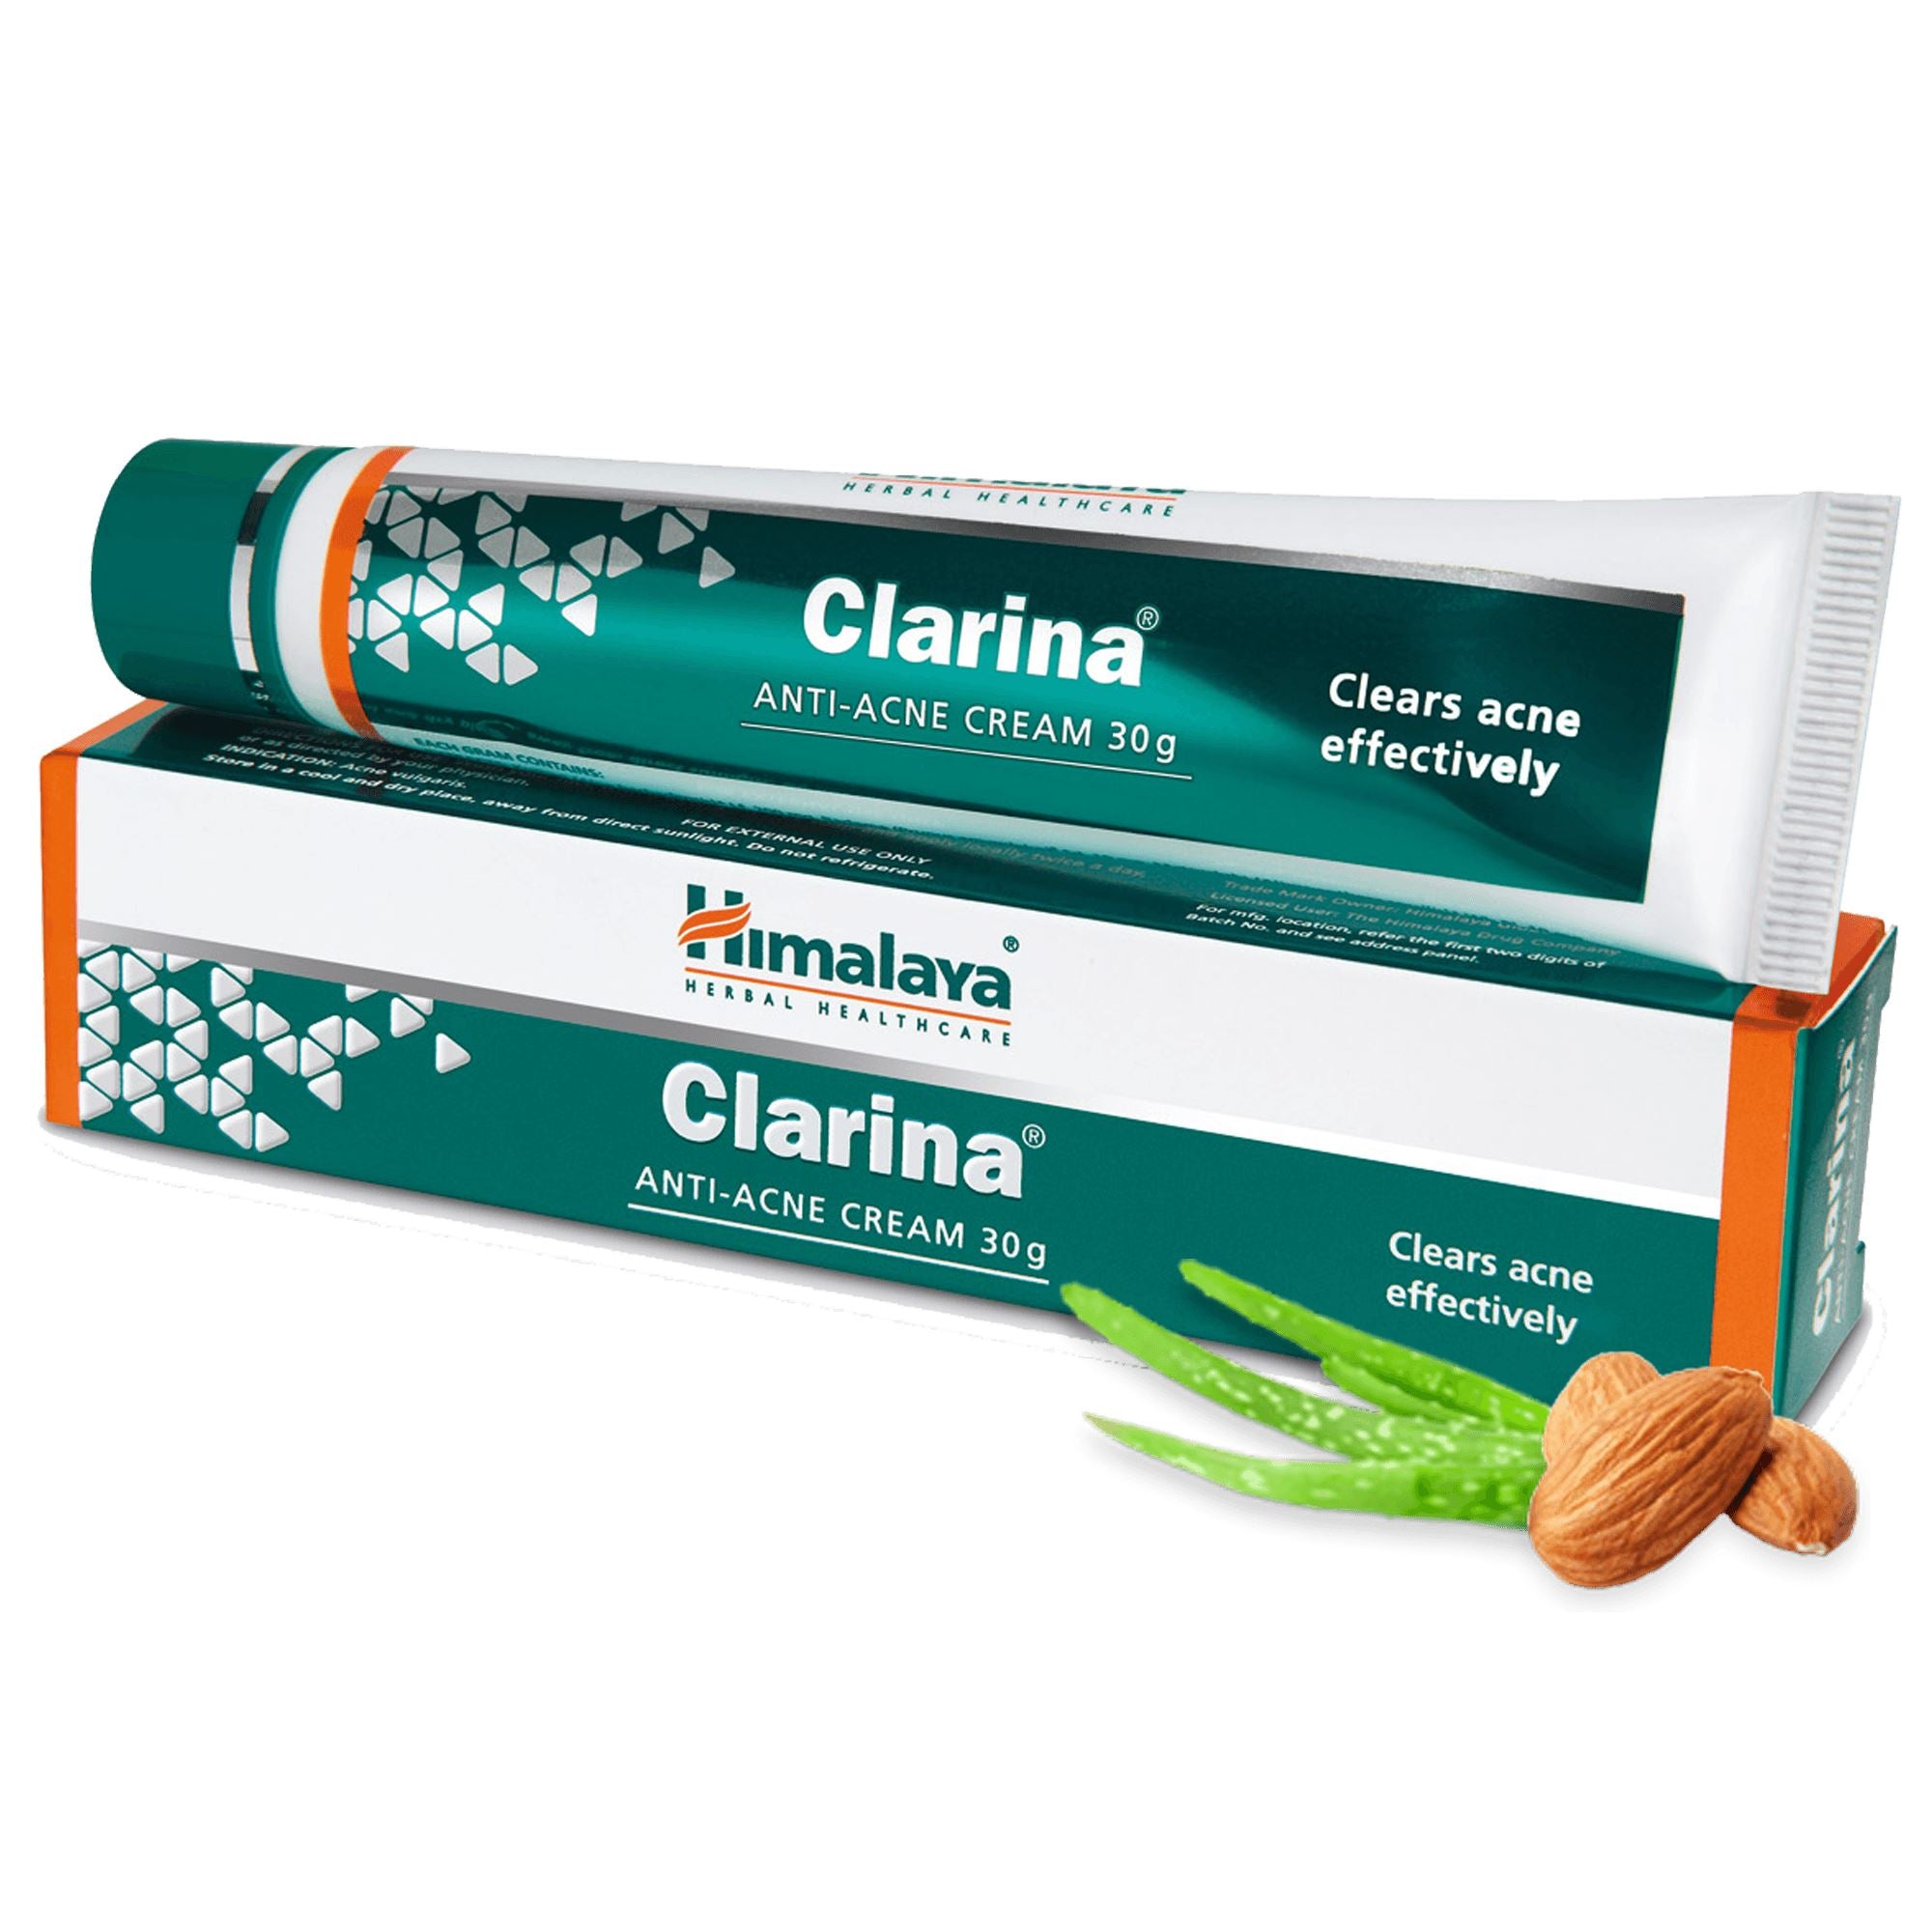 Himalaya Clarina Anti-Acne Cream - Clears acne effectively